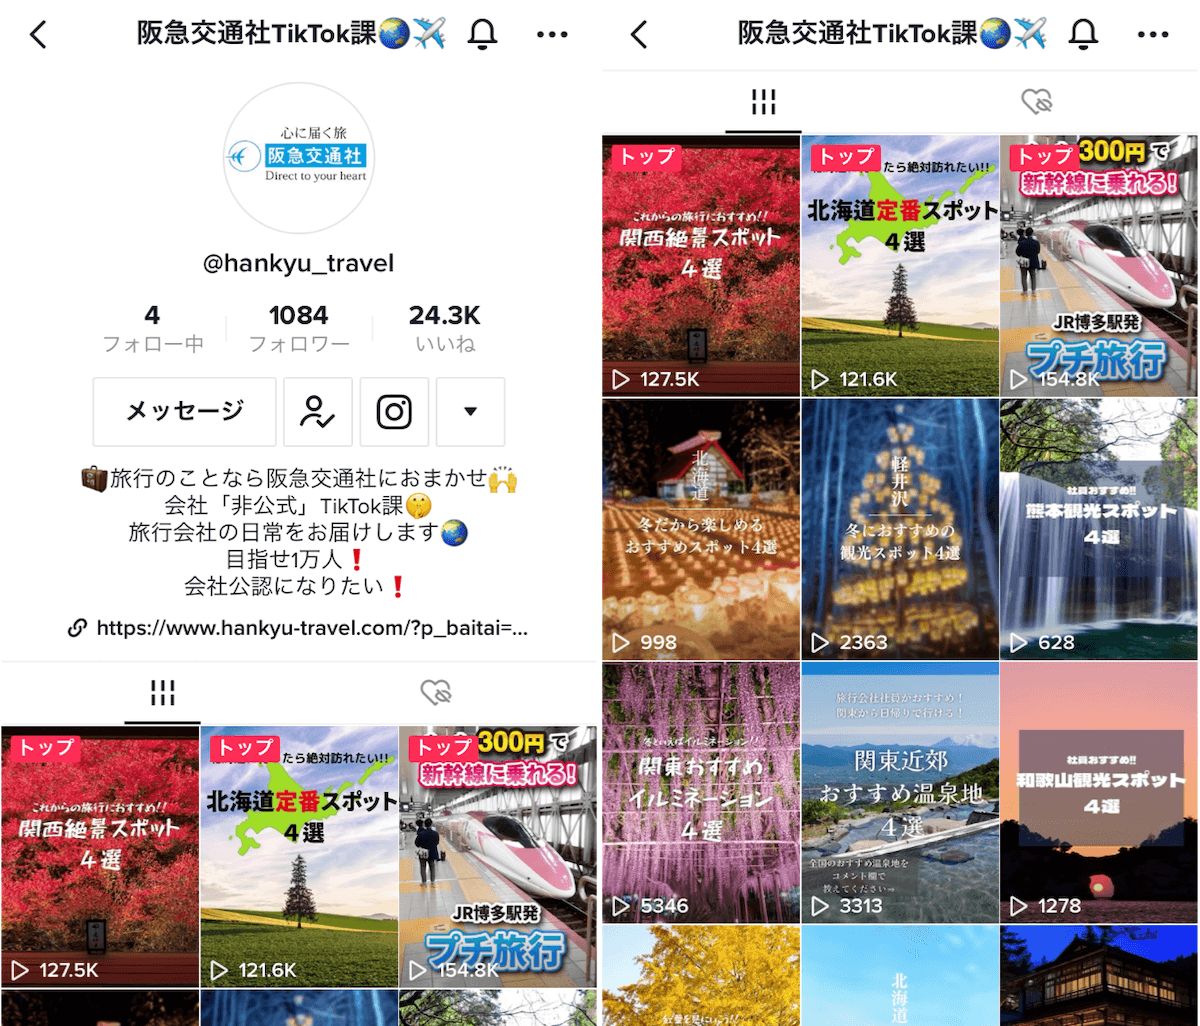 tiktok-official-accounts-travel-hankyu-travel